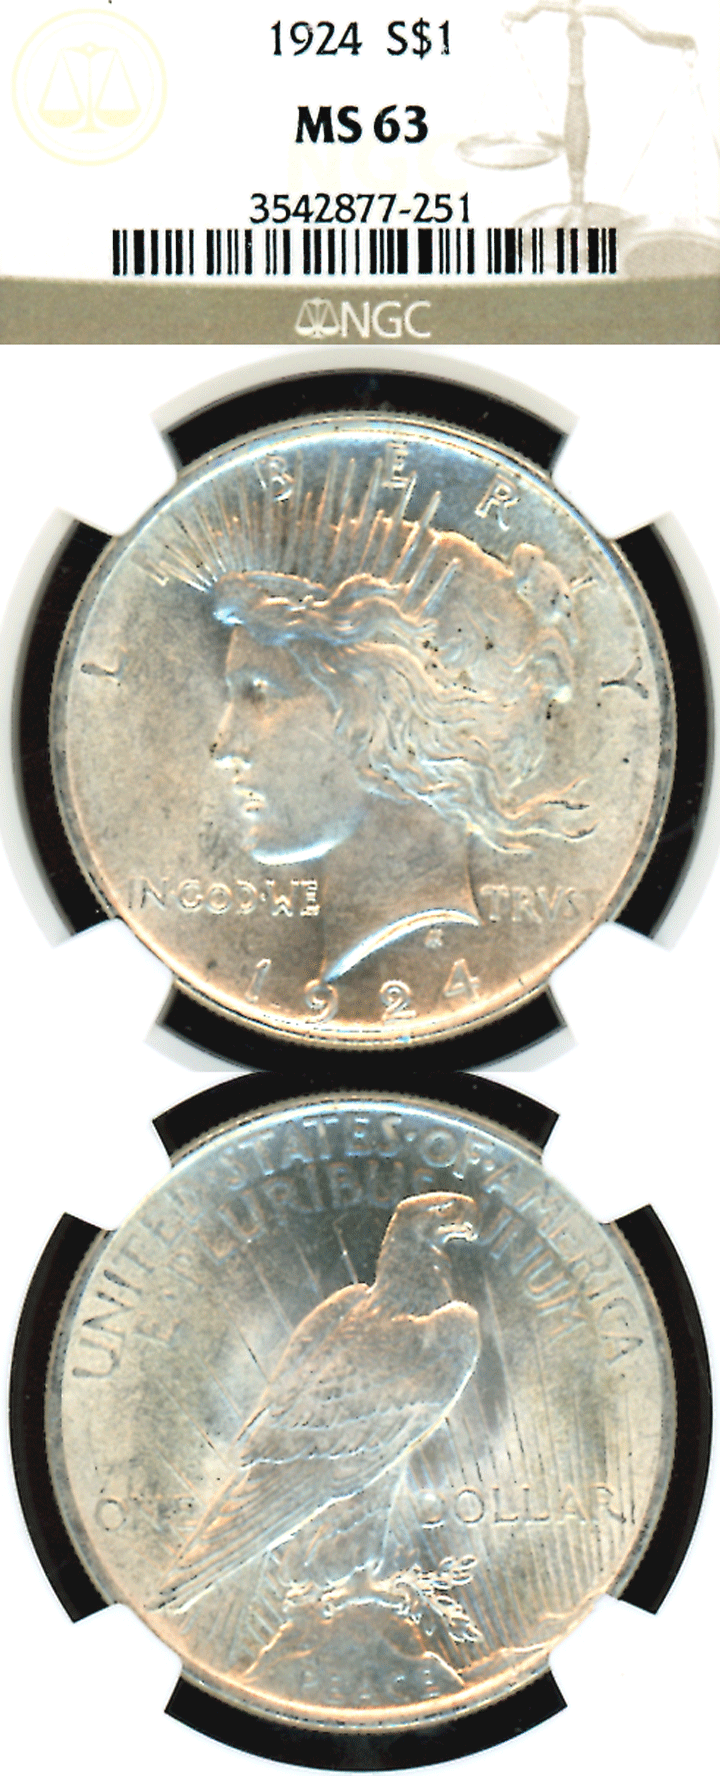 1924 $ MS-63 US Peace silver dollar